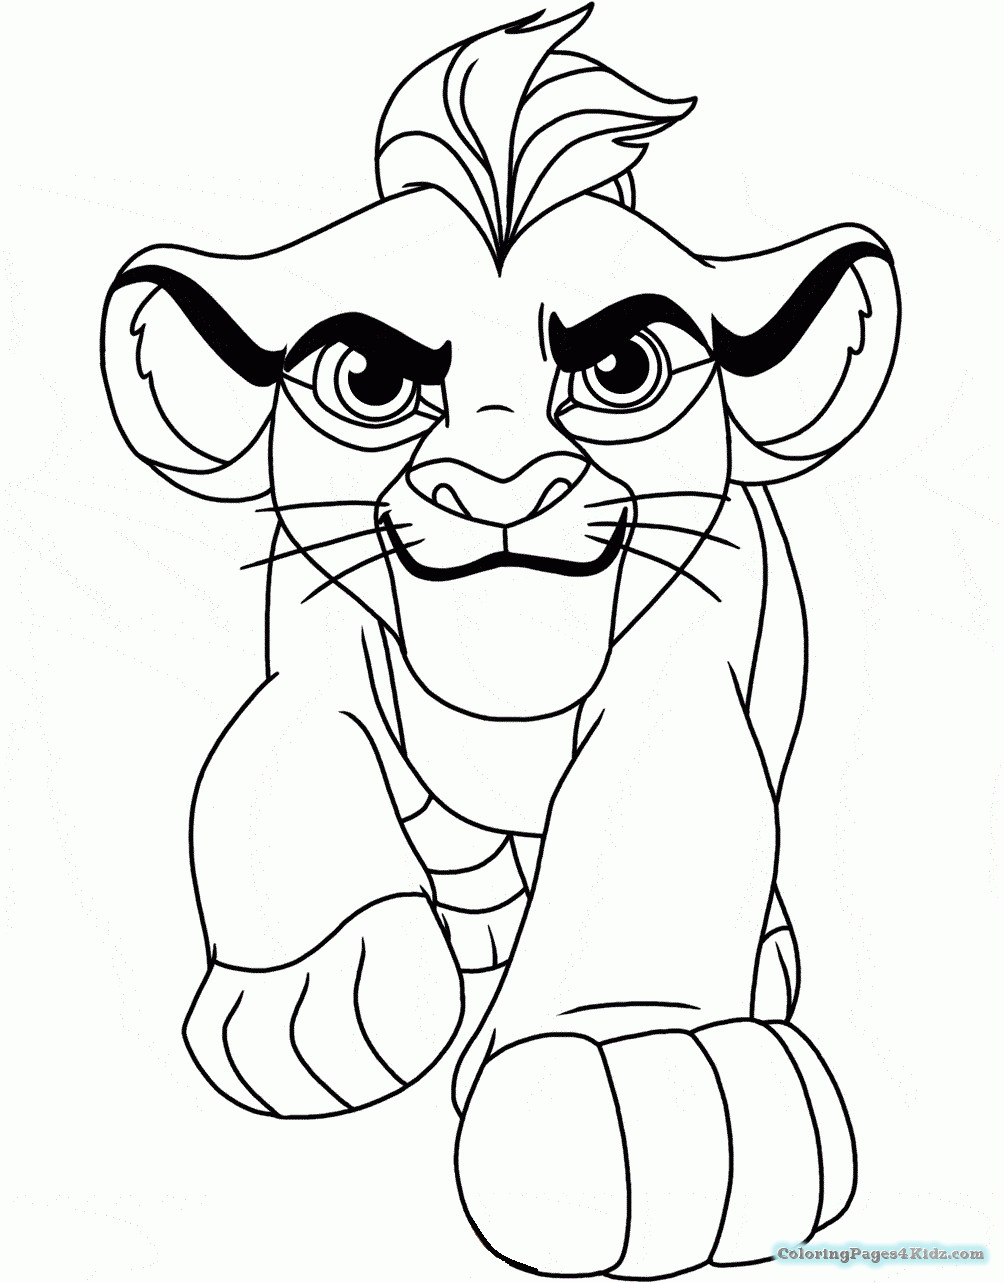 Best ideas about Lion Guard Coloring Pages
. Save or Pin Coloring Pages The Lion Guard Now.